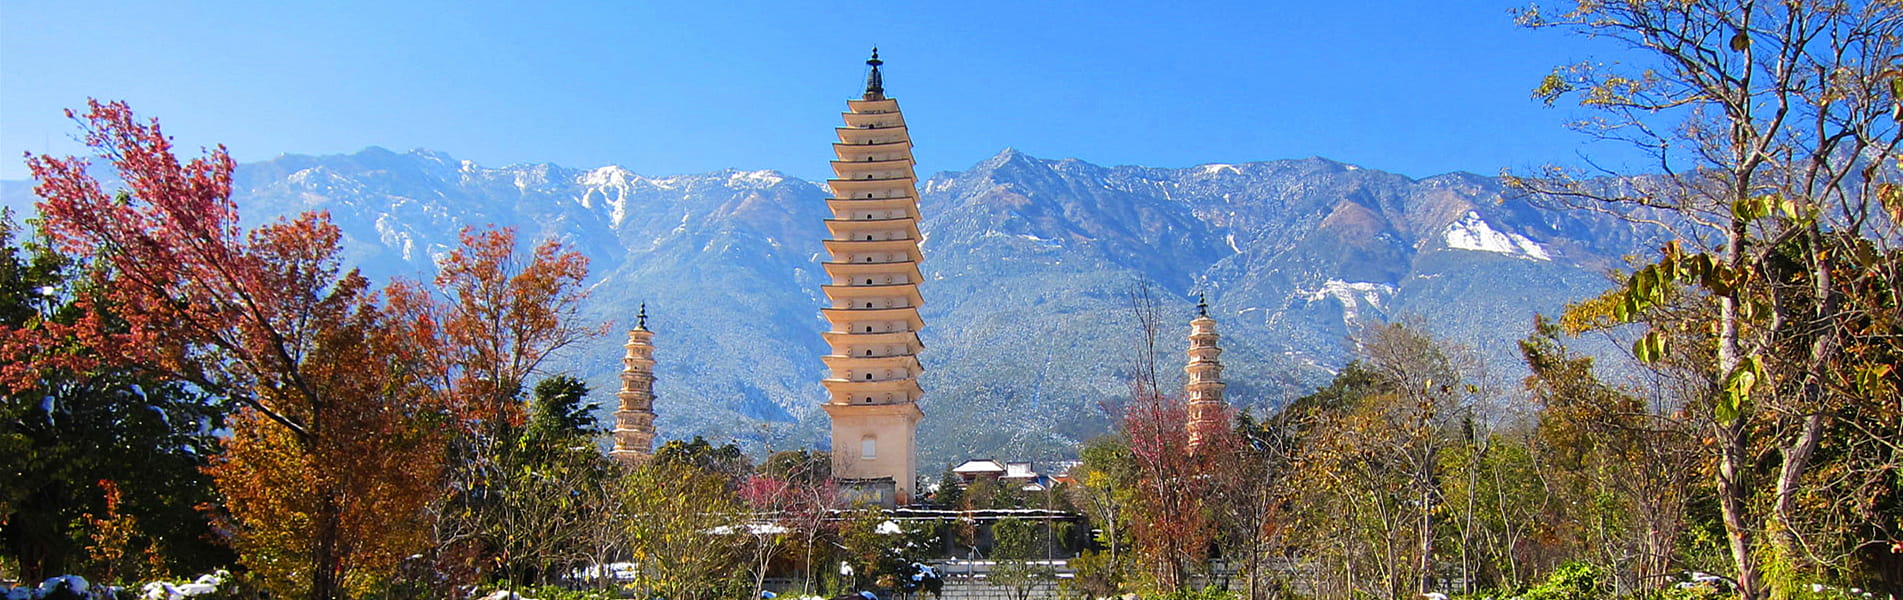 Three Pagodas Temple, Dali